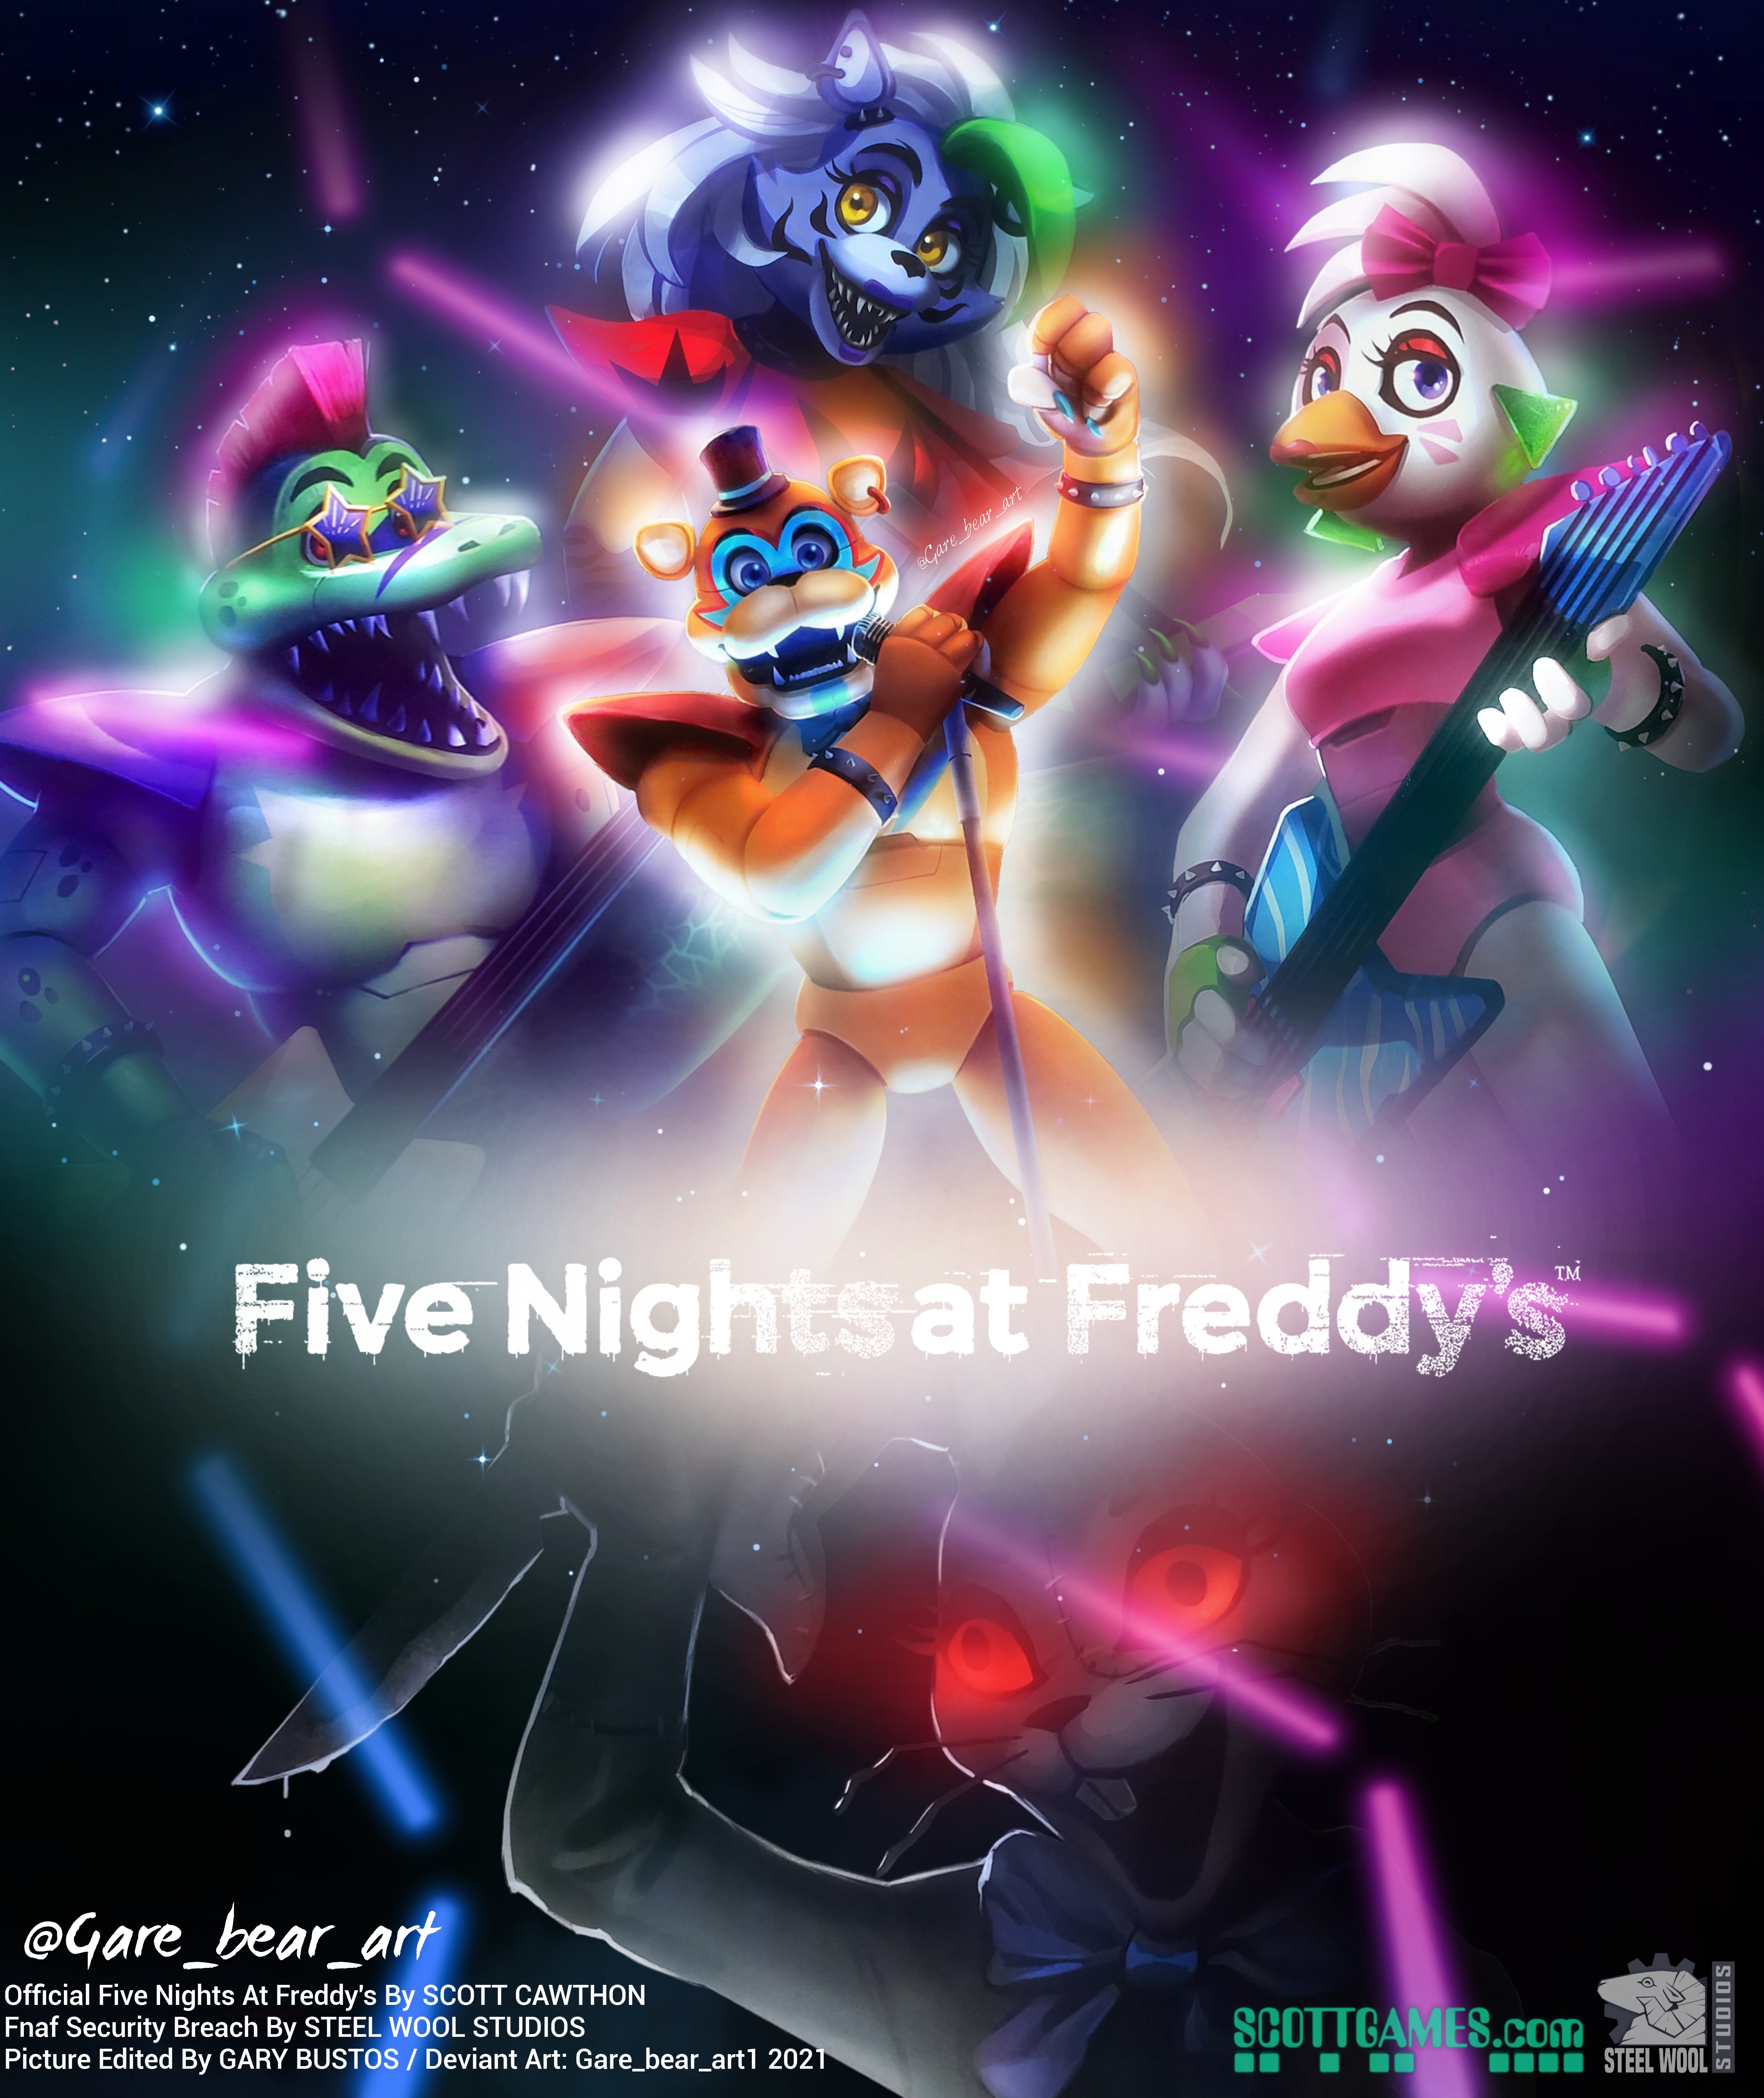 Five Nights at Freddy's: Security Breach chega em dezembro